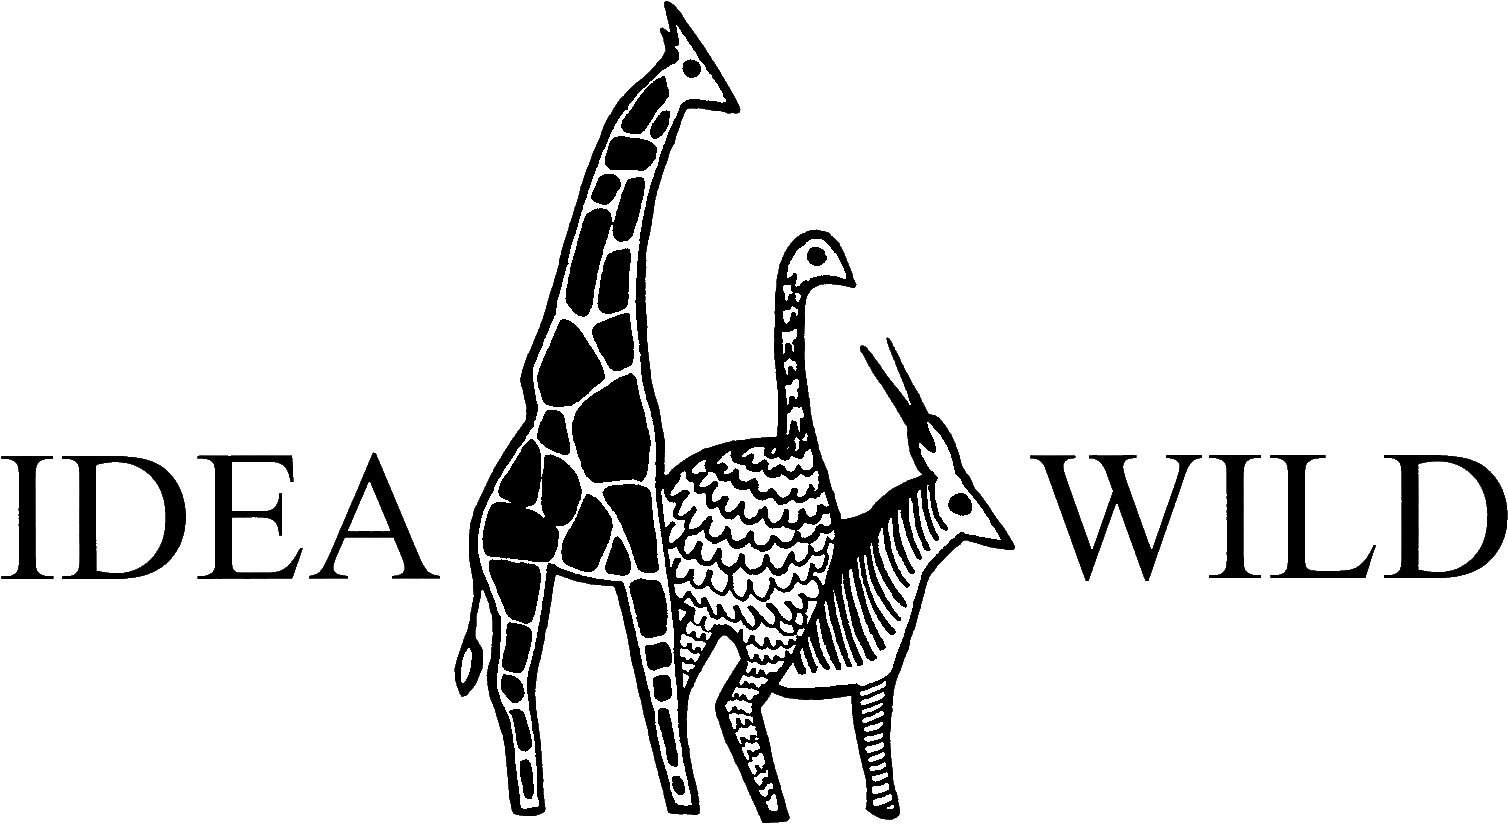 IDEA WILD logo